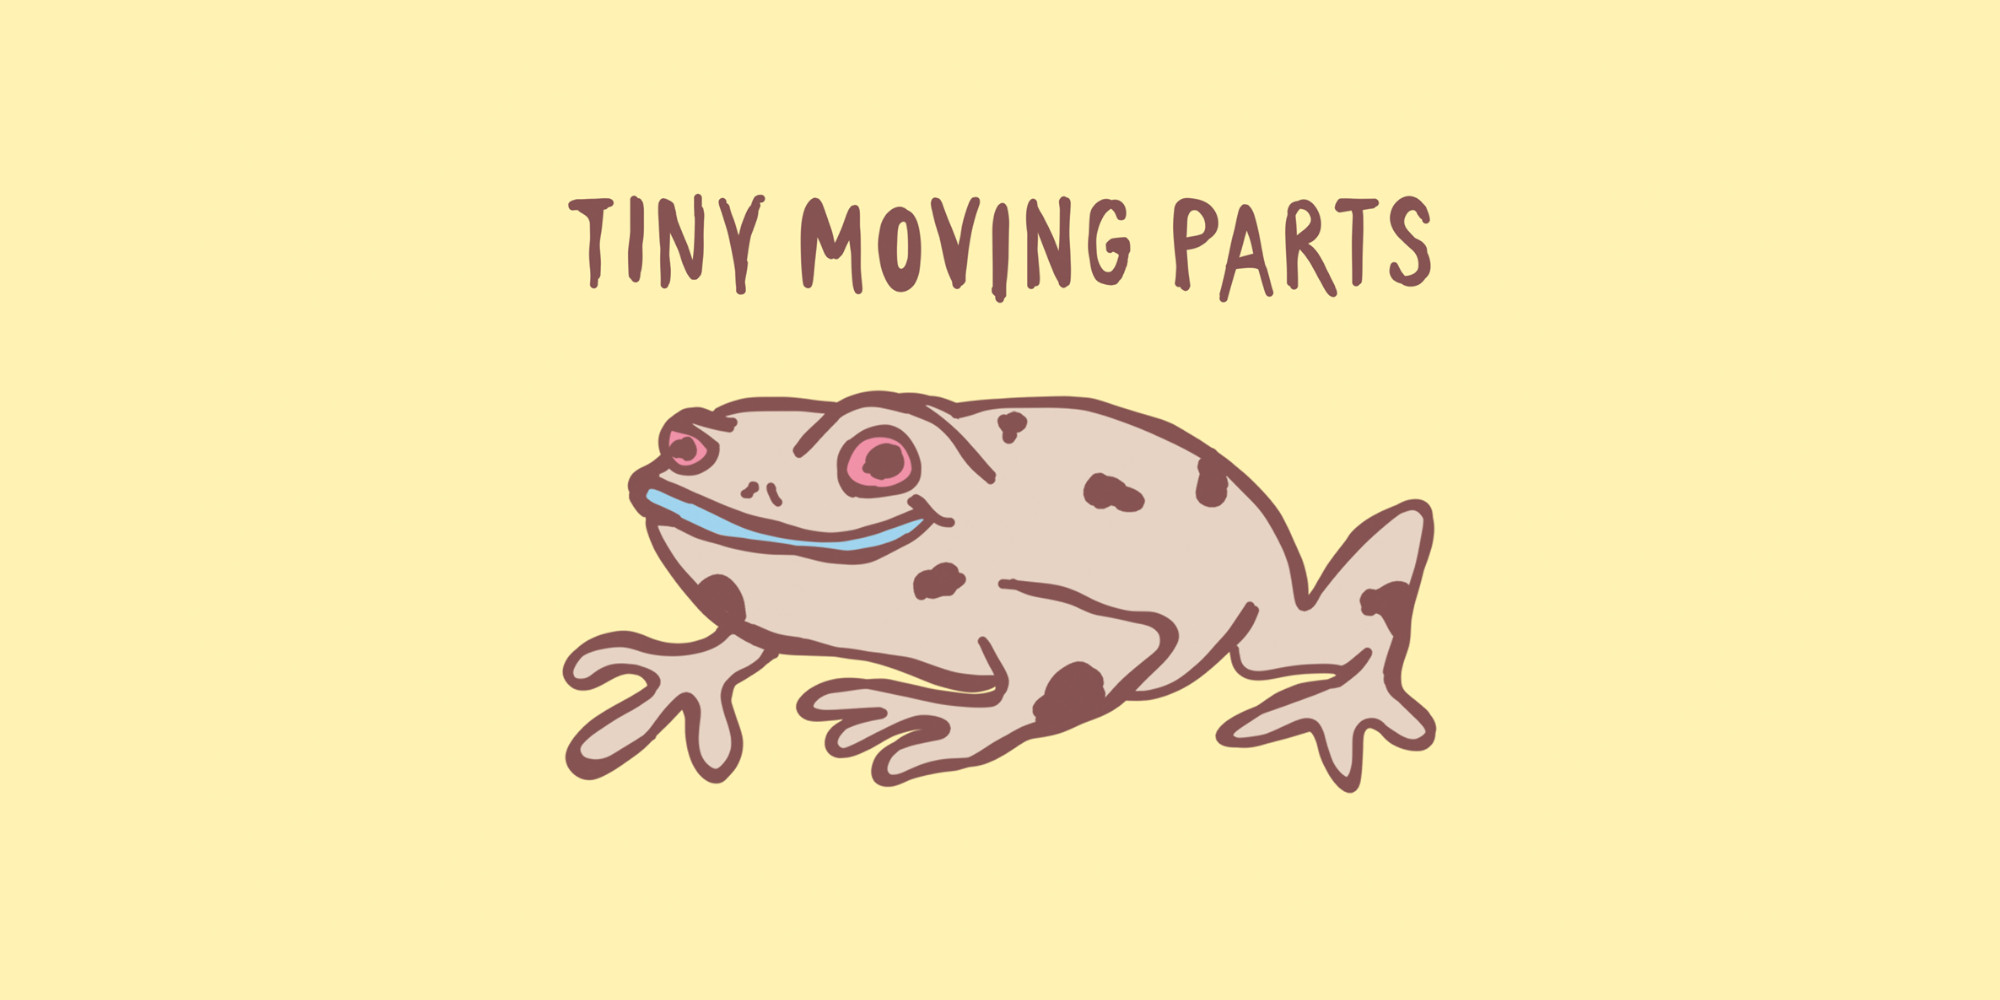 Tiny Moving Parts - VERLEGT INS LUXOR